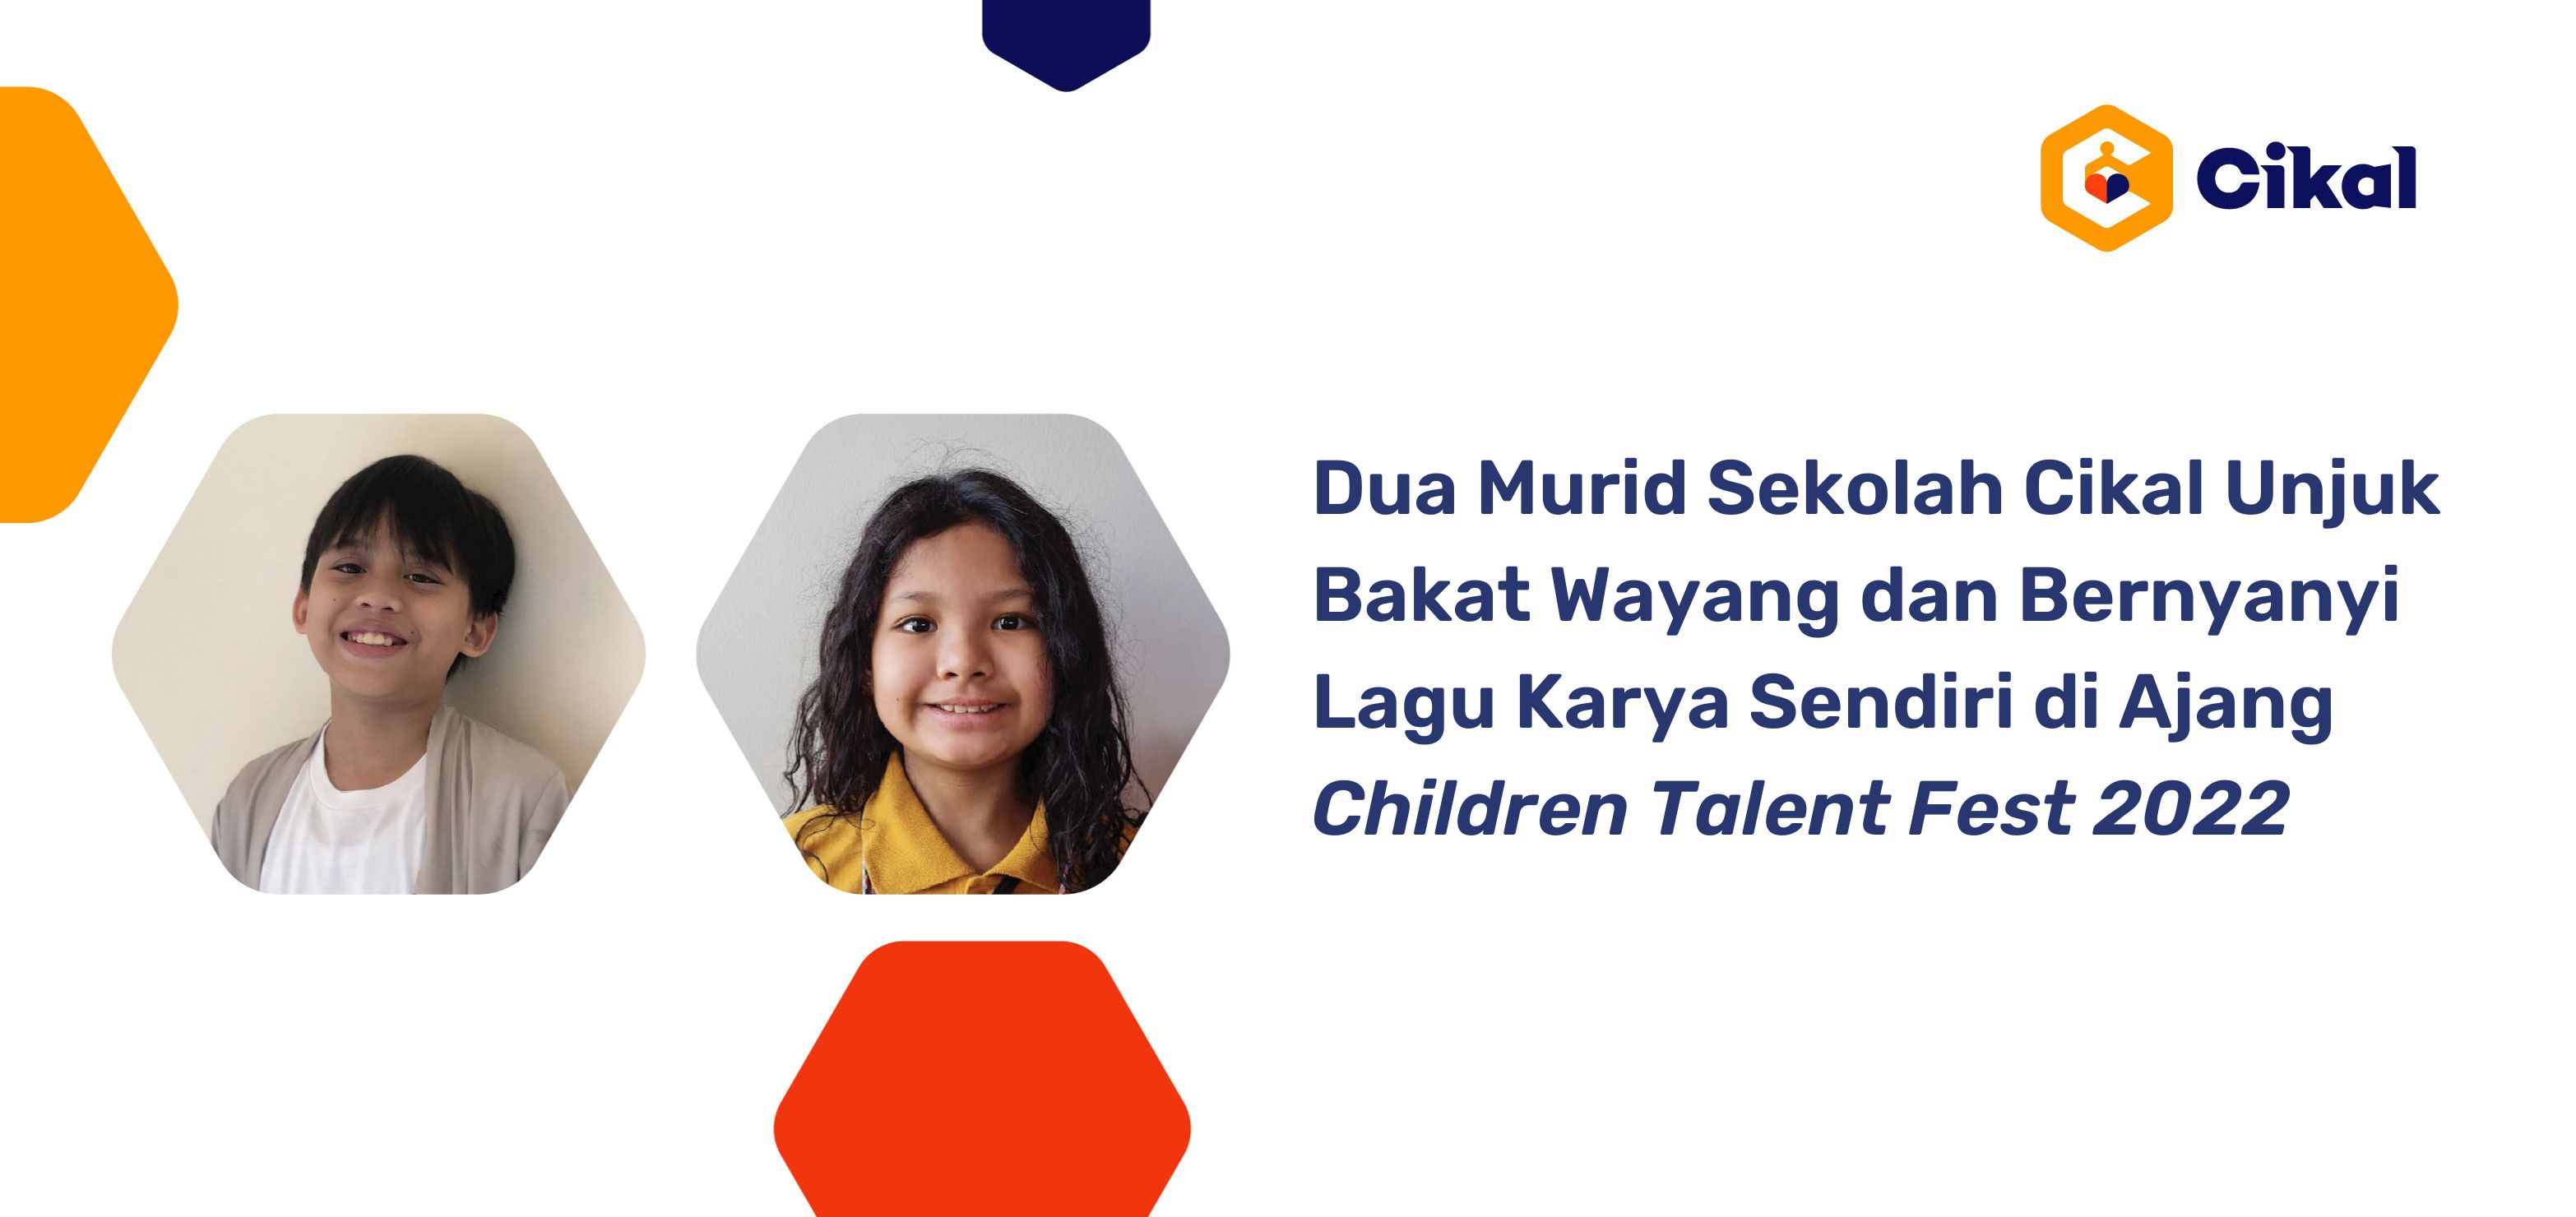 Dua Murid Sekolah Cikal Unjuk Bakat Wayang dan Bernyanyi Lagu Karya Sendiri di Ajang Children Talent Fest 2022